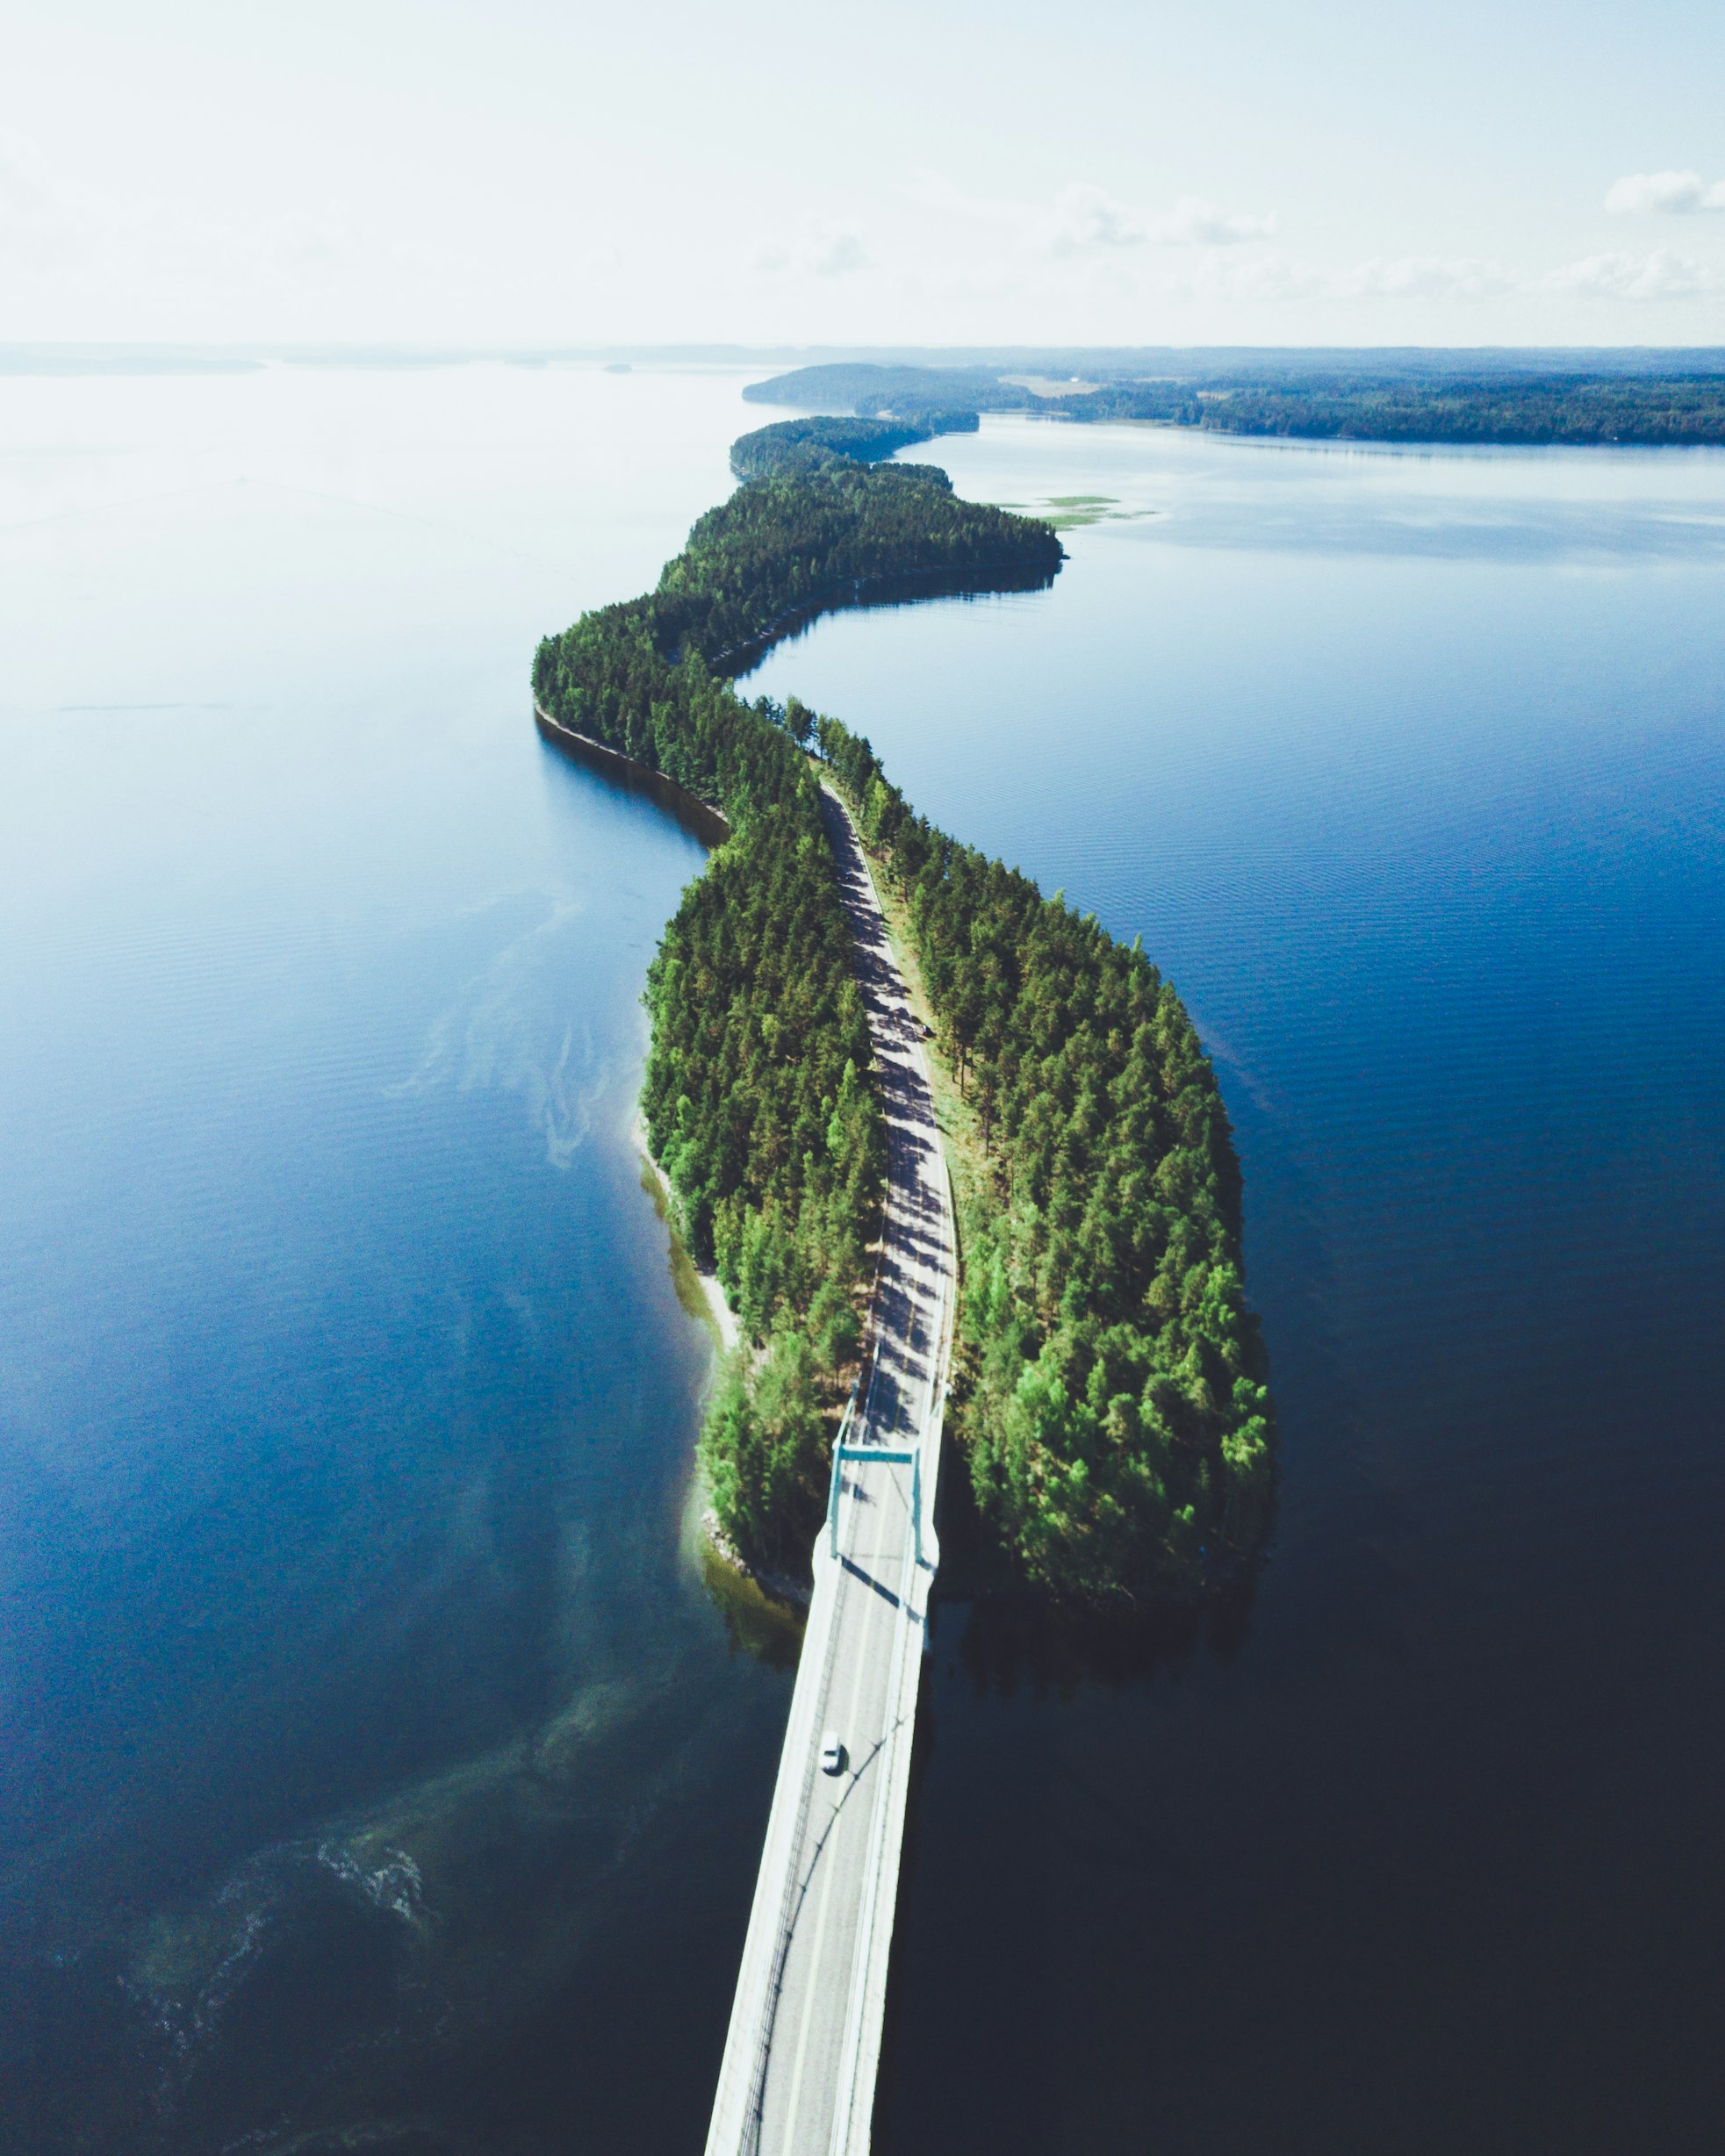 Karisalmi Bridge - Asikkala, Finland